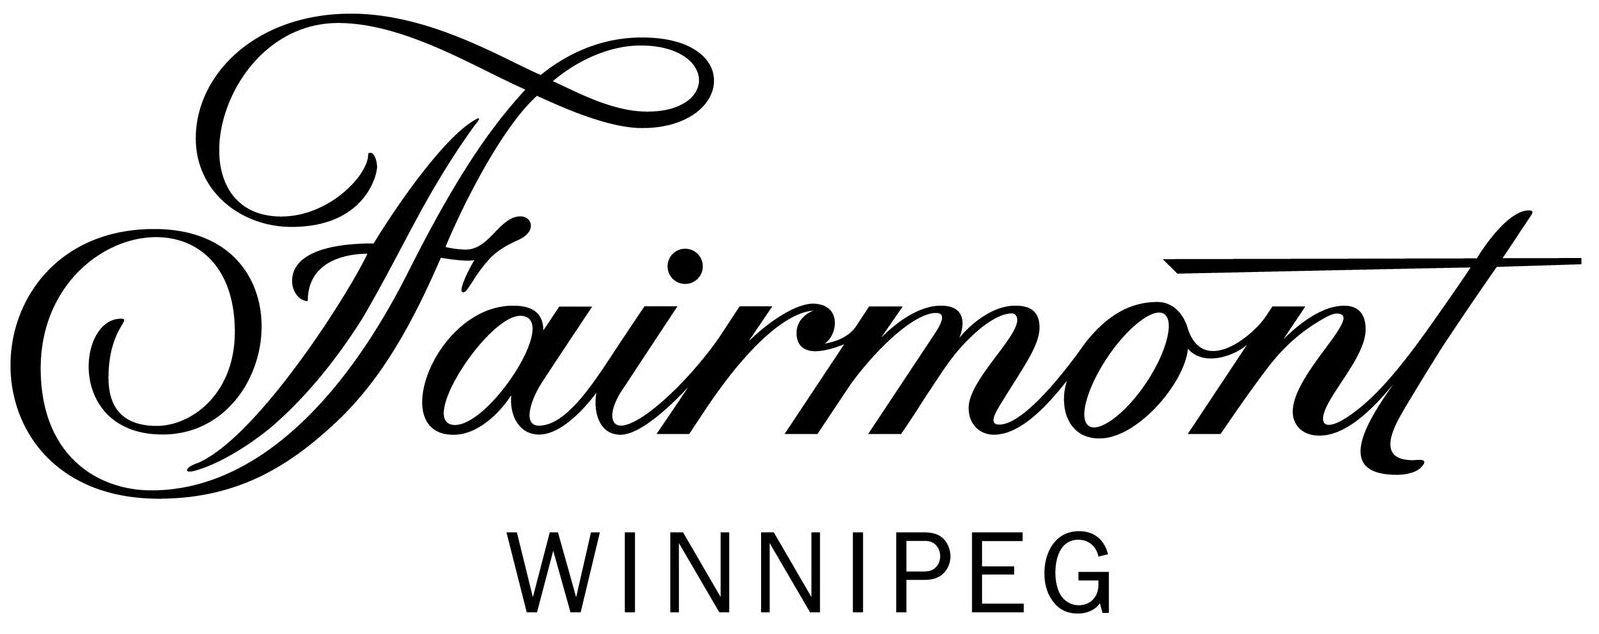 a black and white logo for fairmont winnipeg .